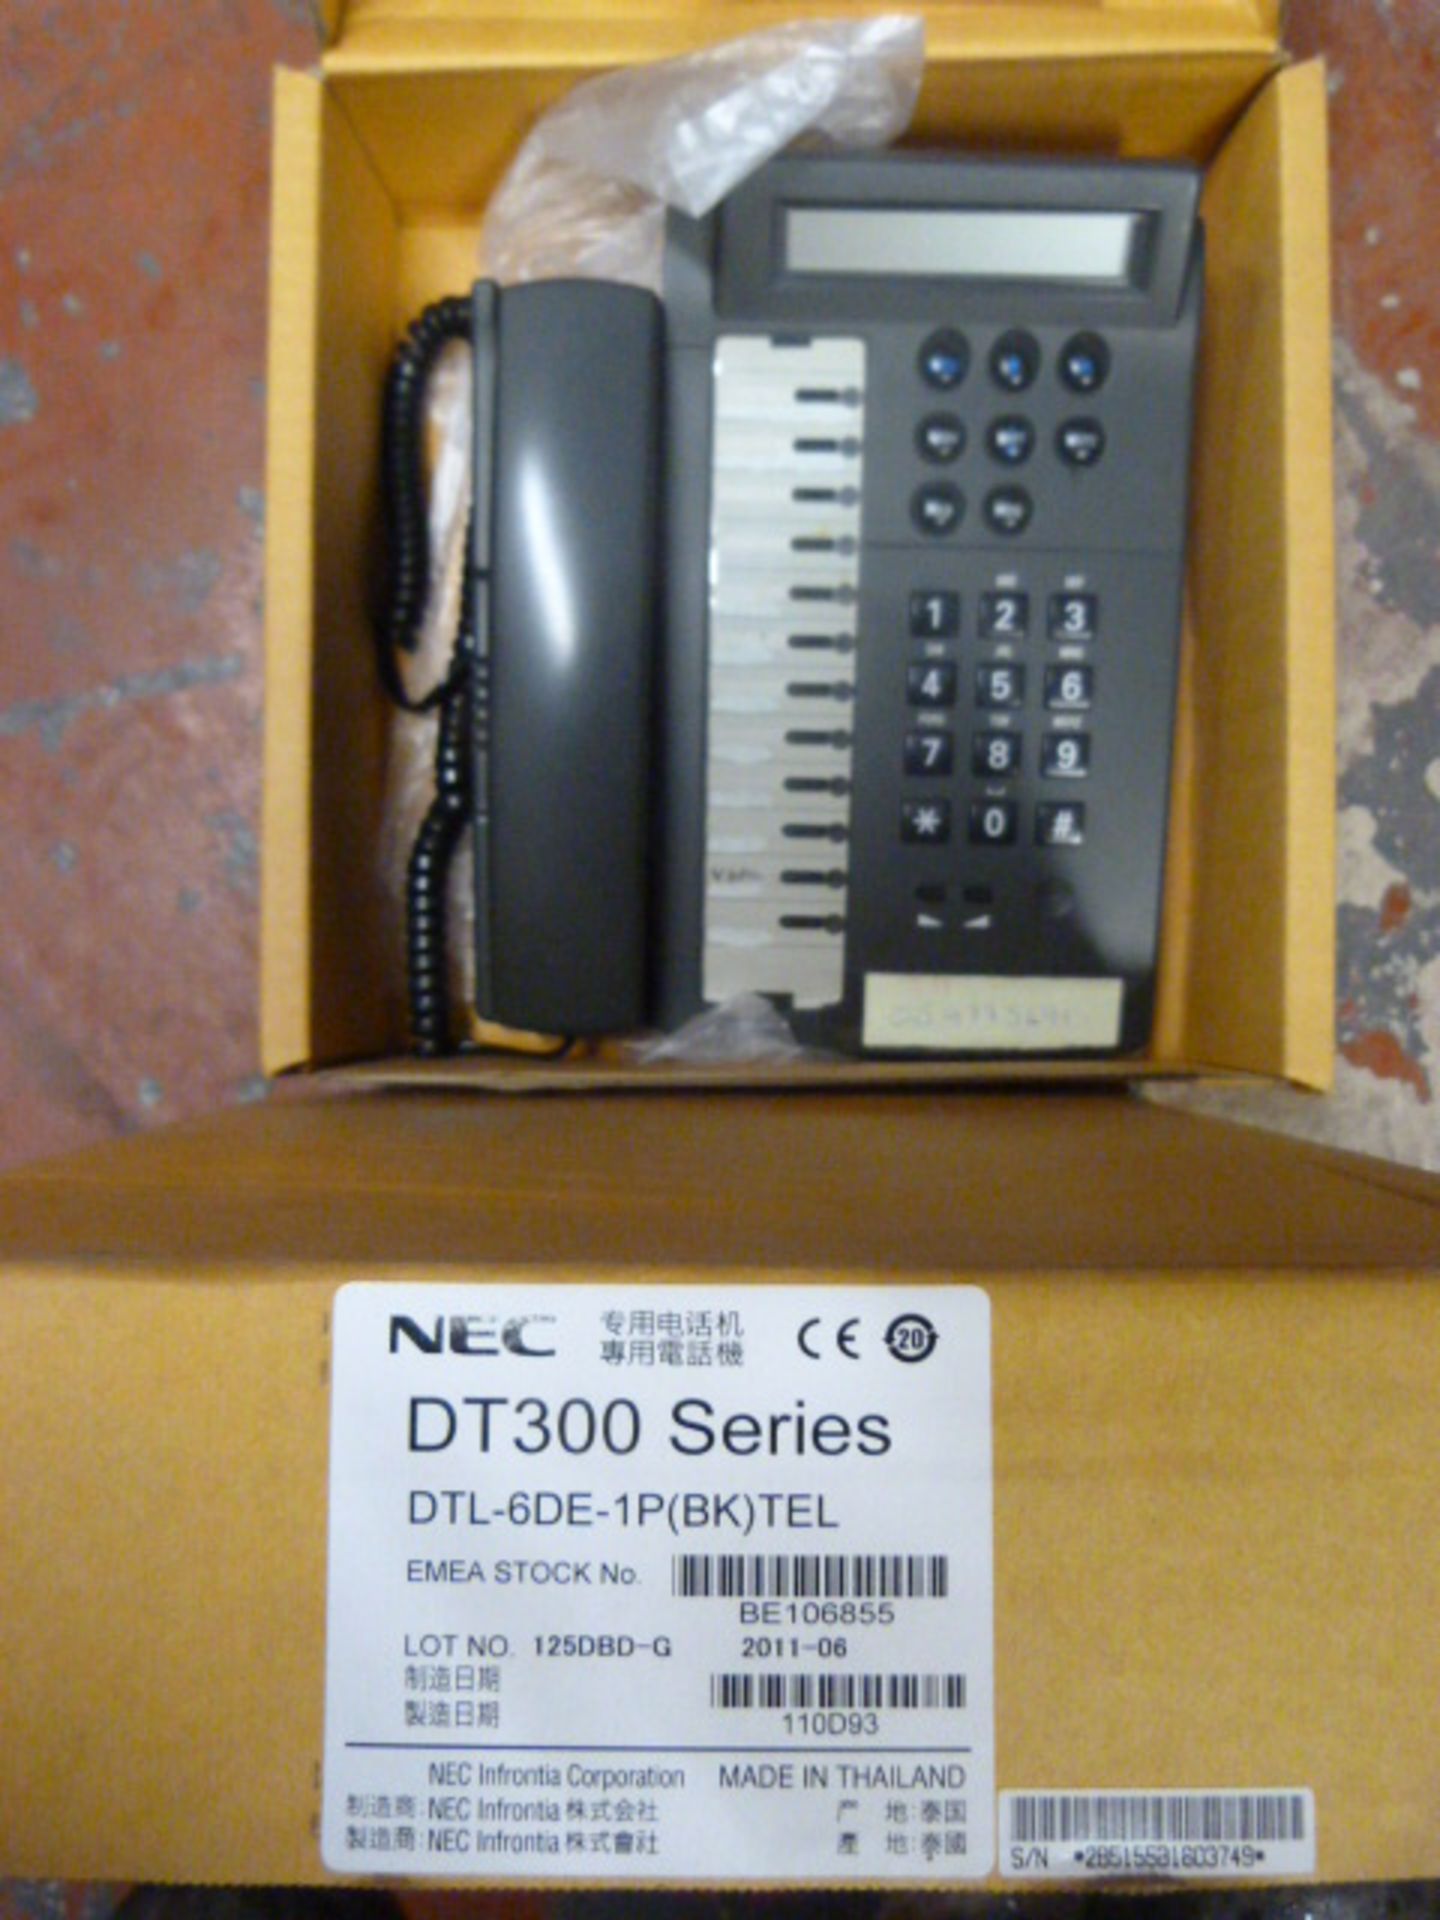 *Five Nec DT300 Series Telephones